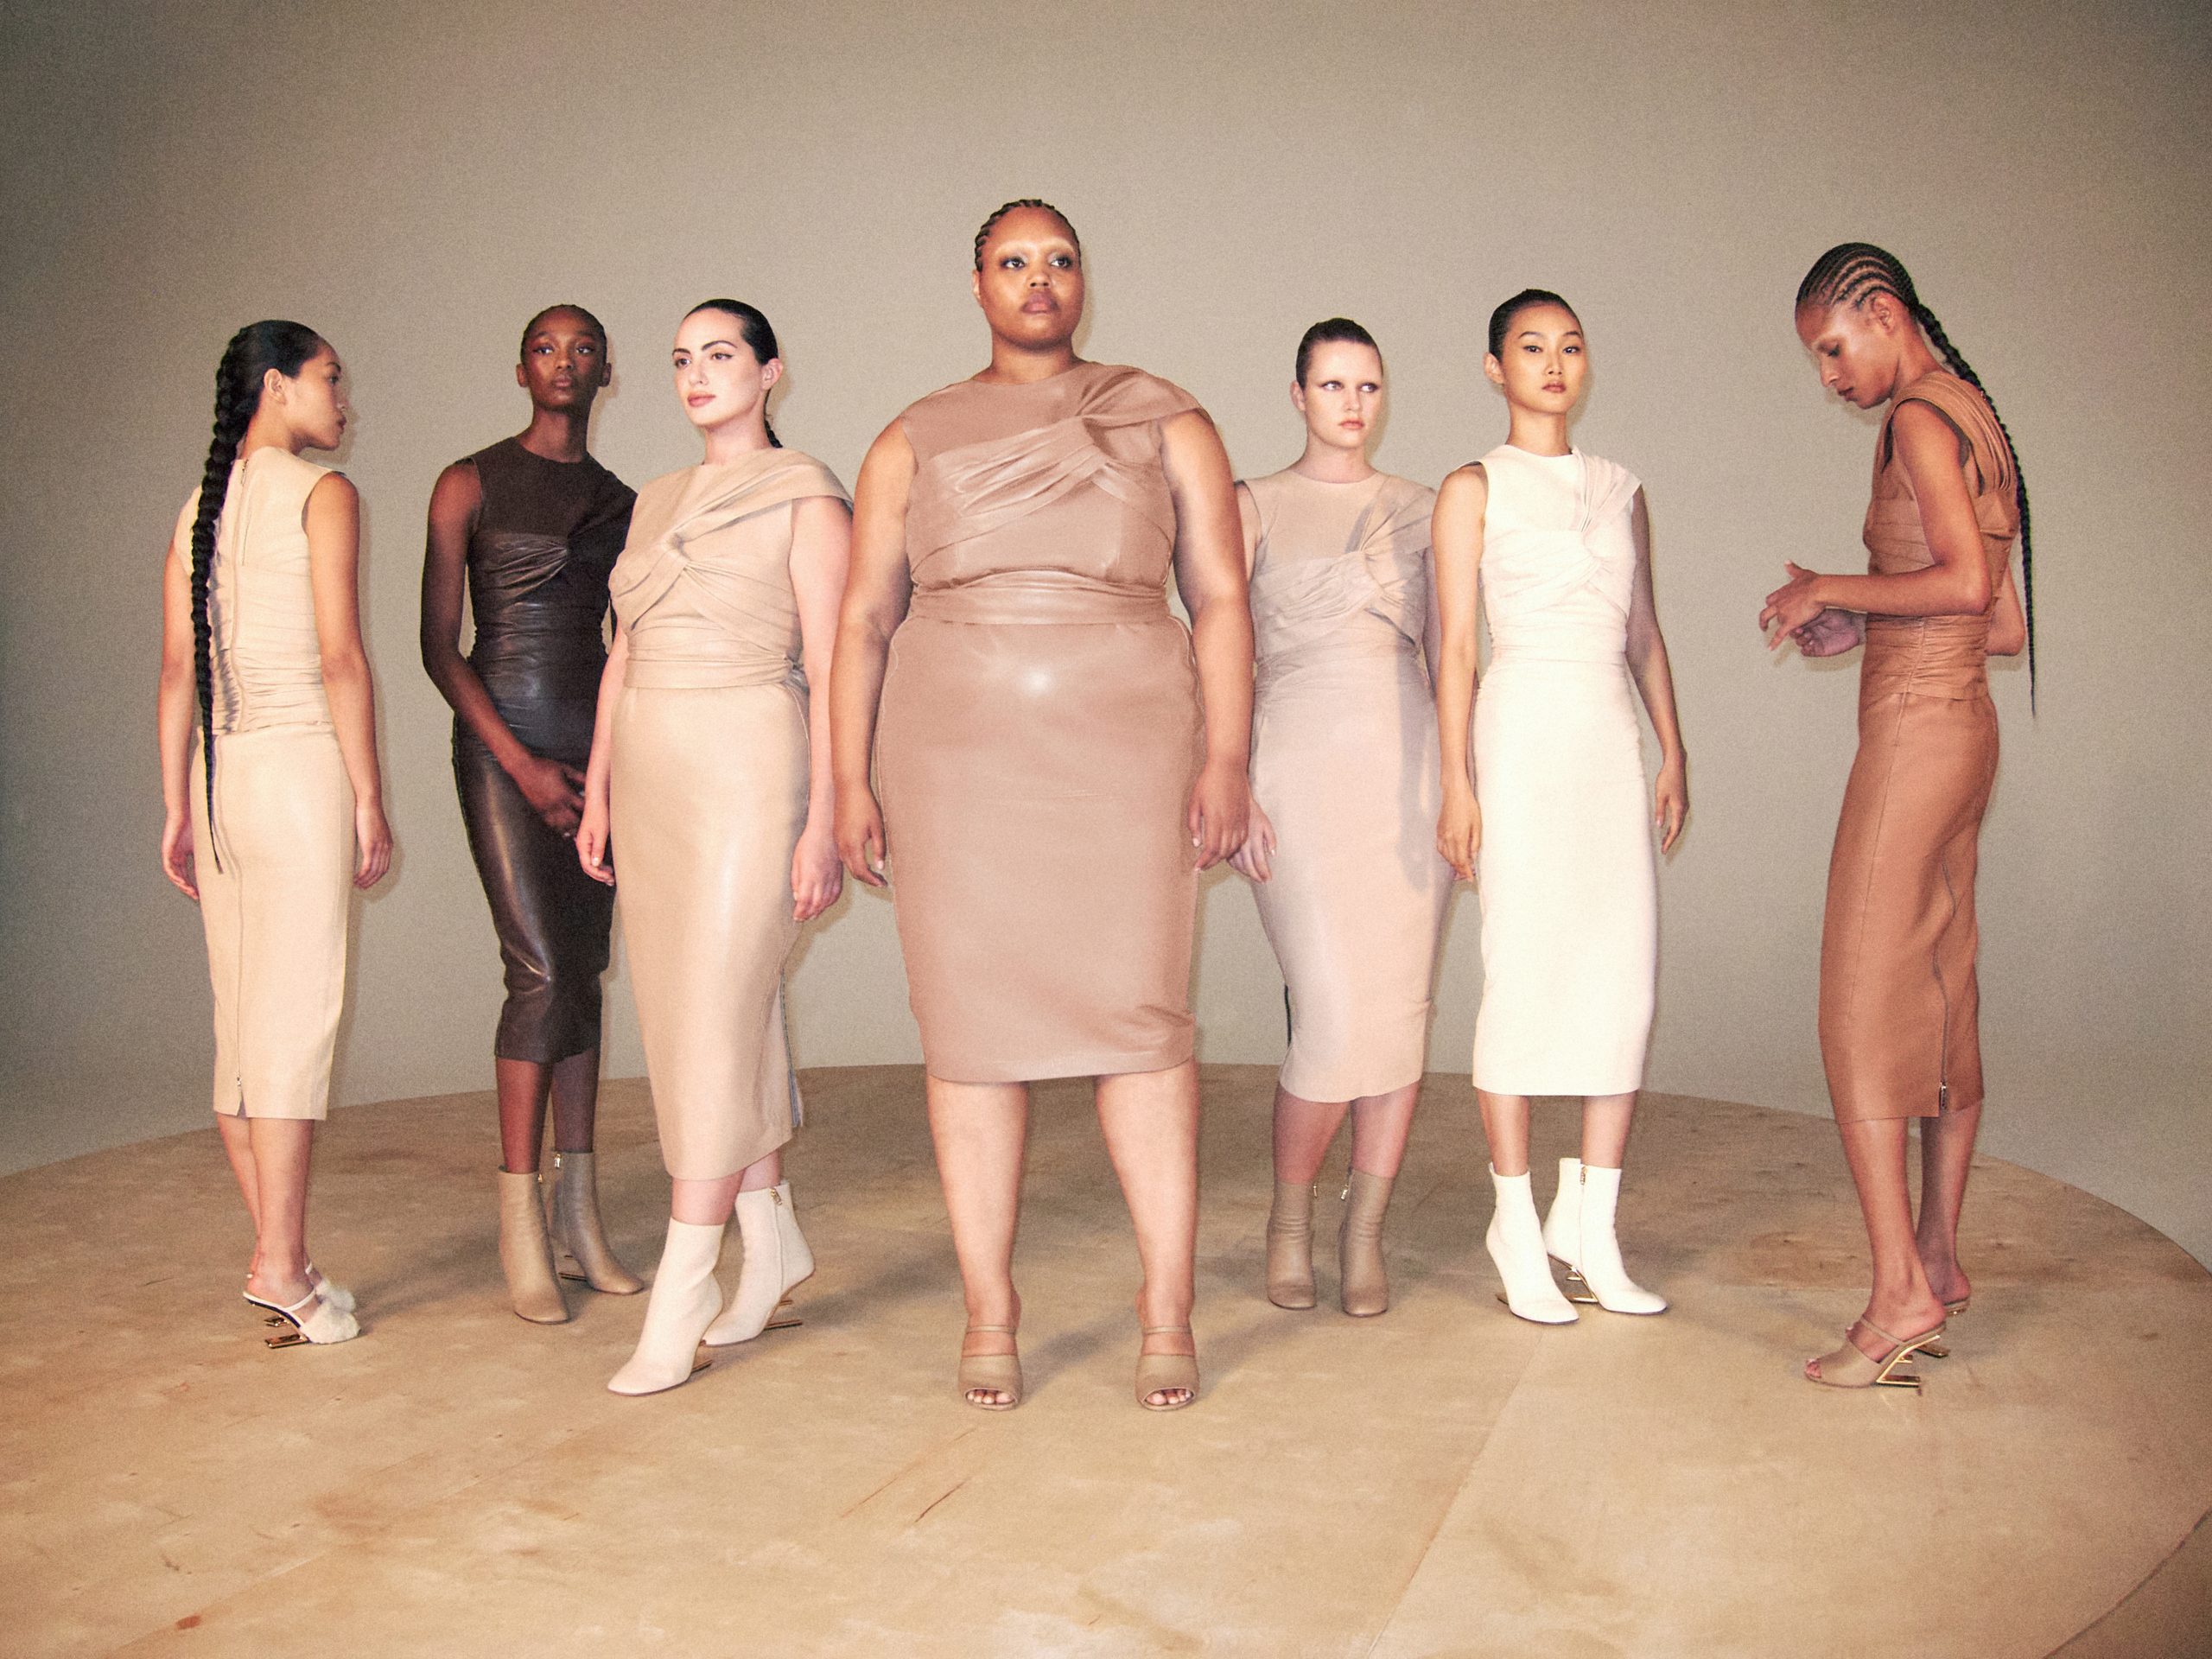 Skims loungewear review: Has Kim Kardashian's brand delivered on